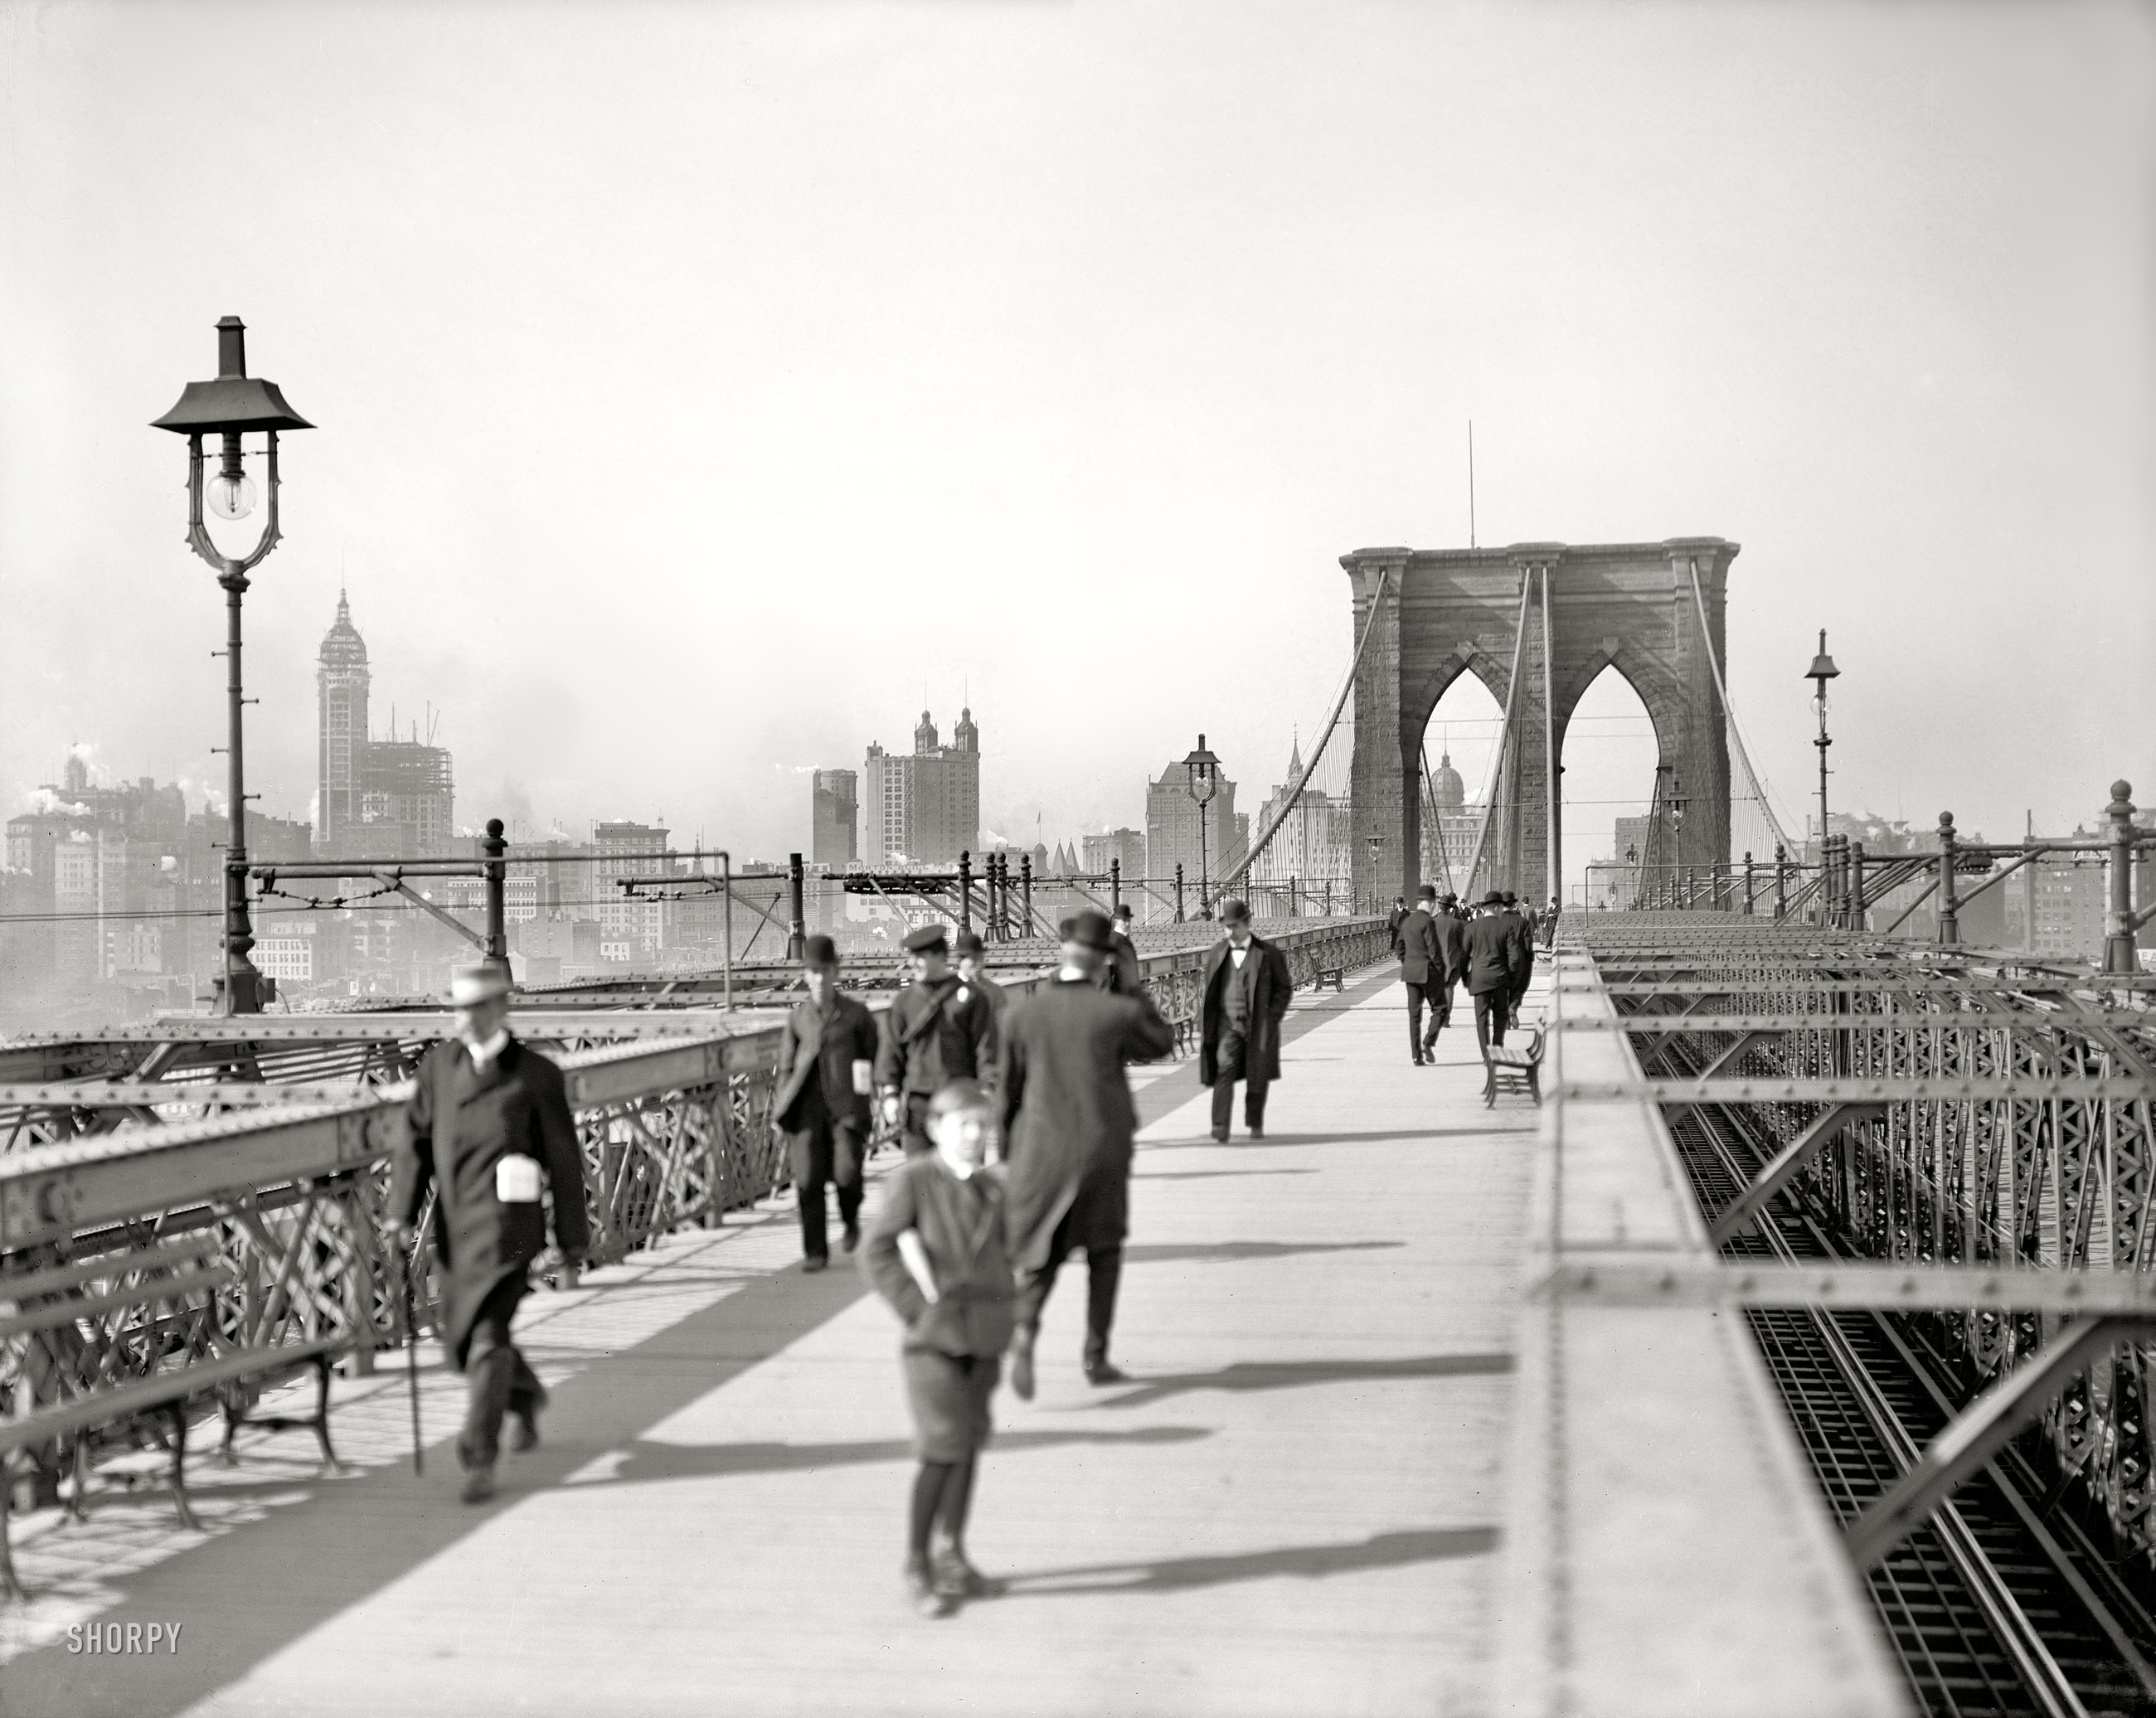 New York circa 1907. "Brooklyn Bridge." Manhattan's 20th-century skyline takes shape. At left, the Singer Building under construction. View full size.